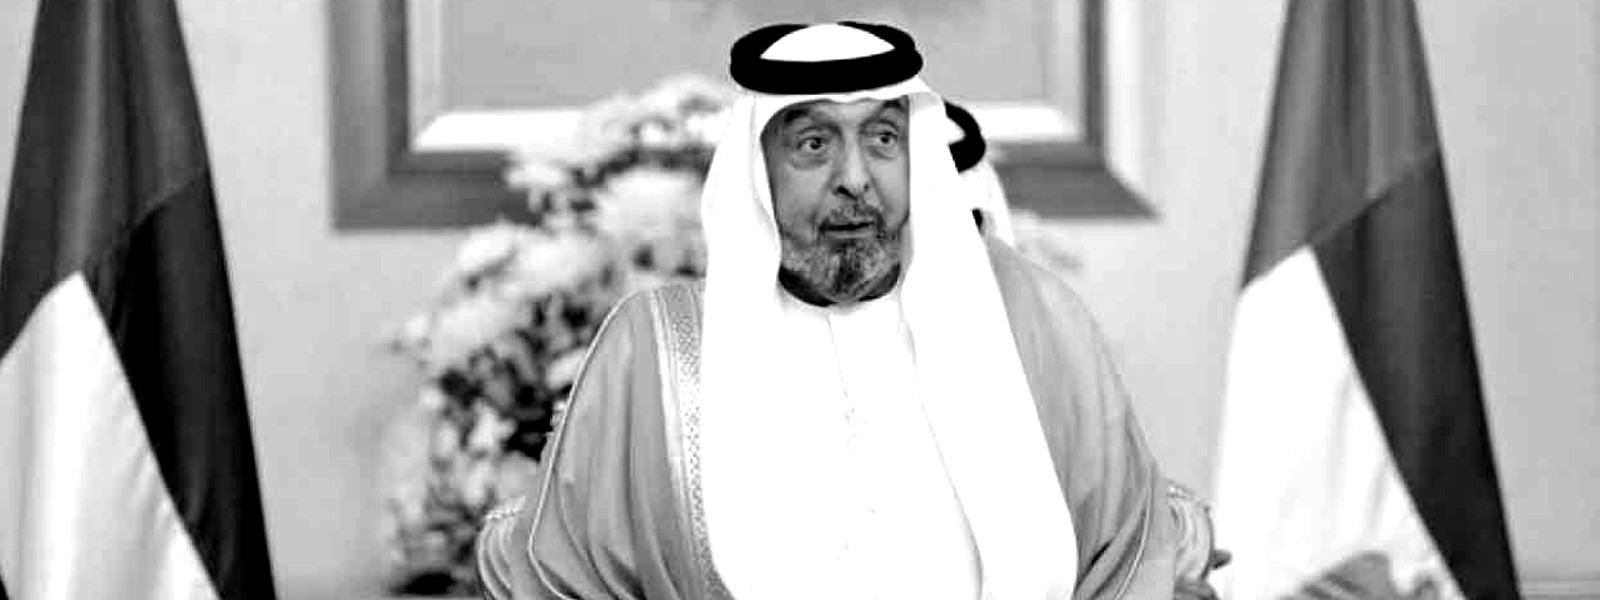 President Sheikh Khalifa bin Zayed Al Nahyan dies: UAE media